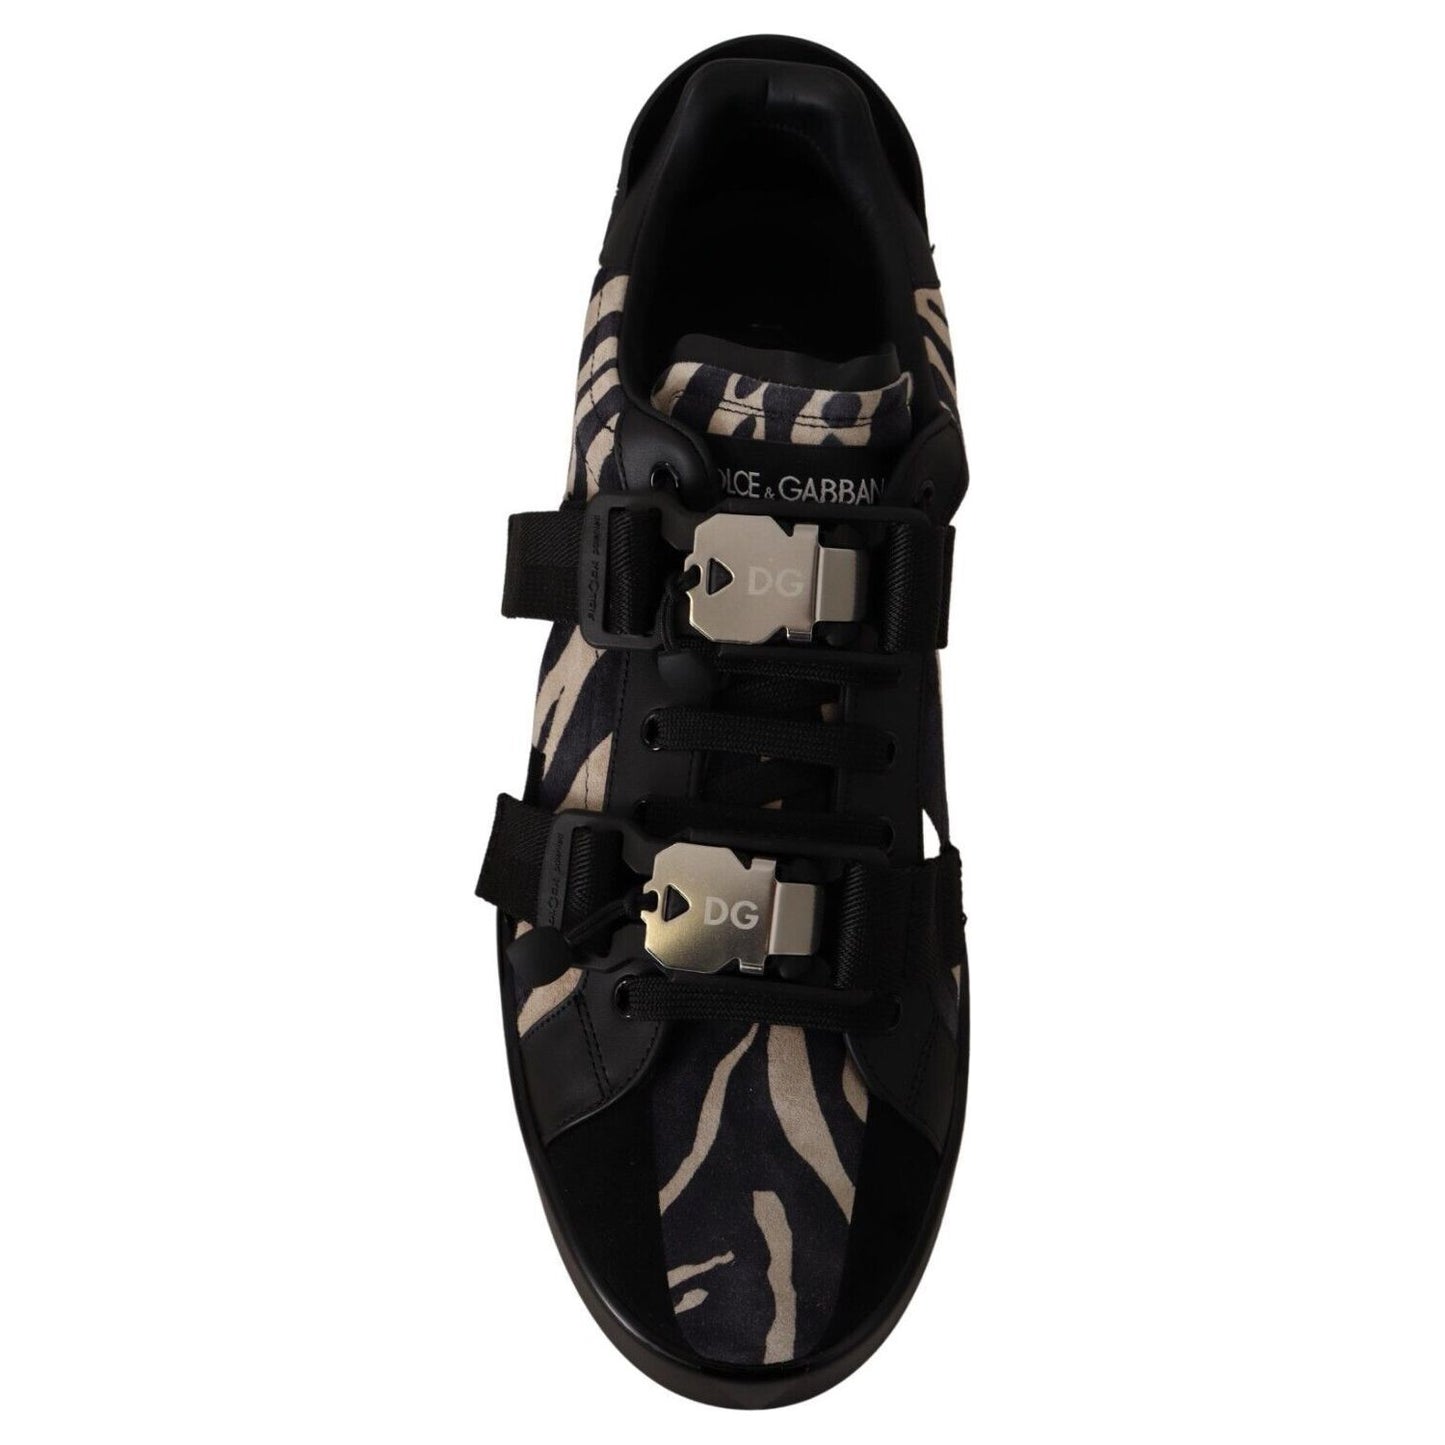 Dolce & Gabbana Zebra Suede Low Top Fashion Sneakers MAN SNEAKERS black-white-zebra-suede-rubber-sneakers-shoes-2 s-l1600-5-16-b4287147-b2e.jpg